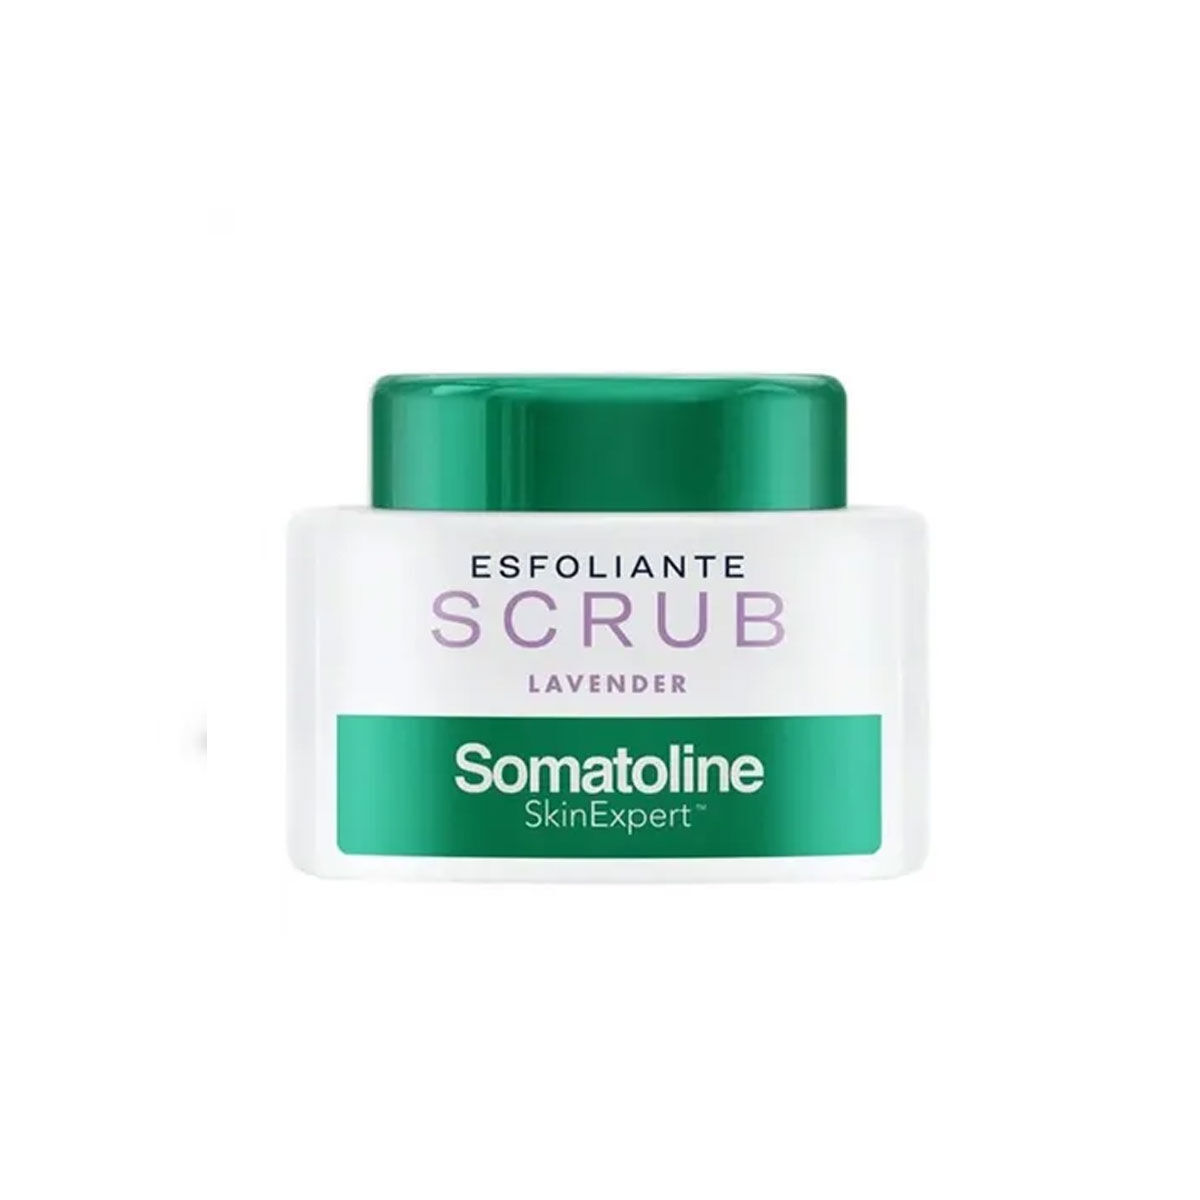 Somatoline Skinexpert Scrub Lavander Trattamento Corpo Esfoliante Sale Integrale 350g